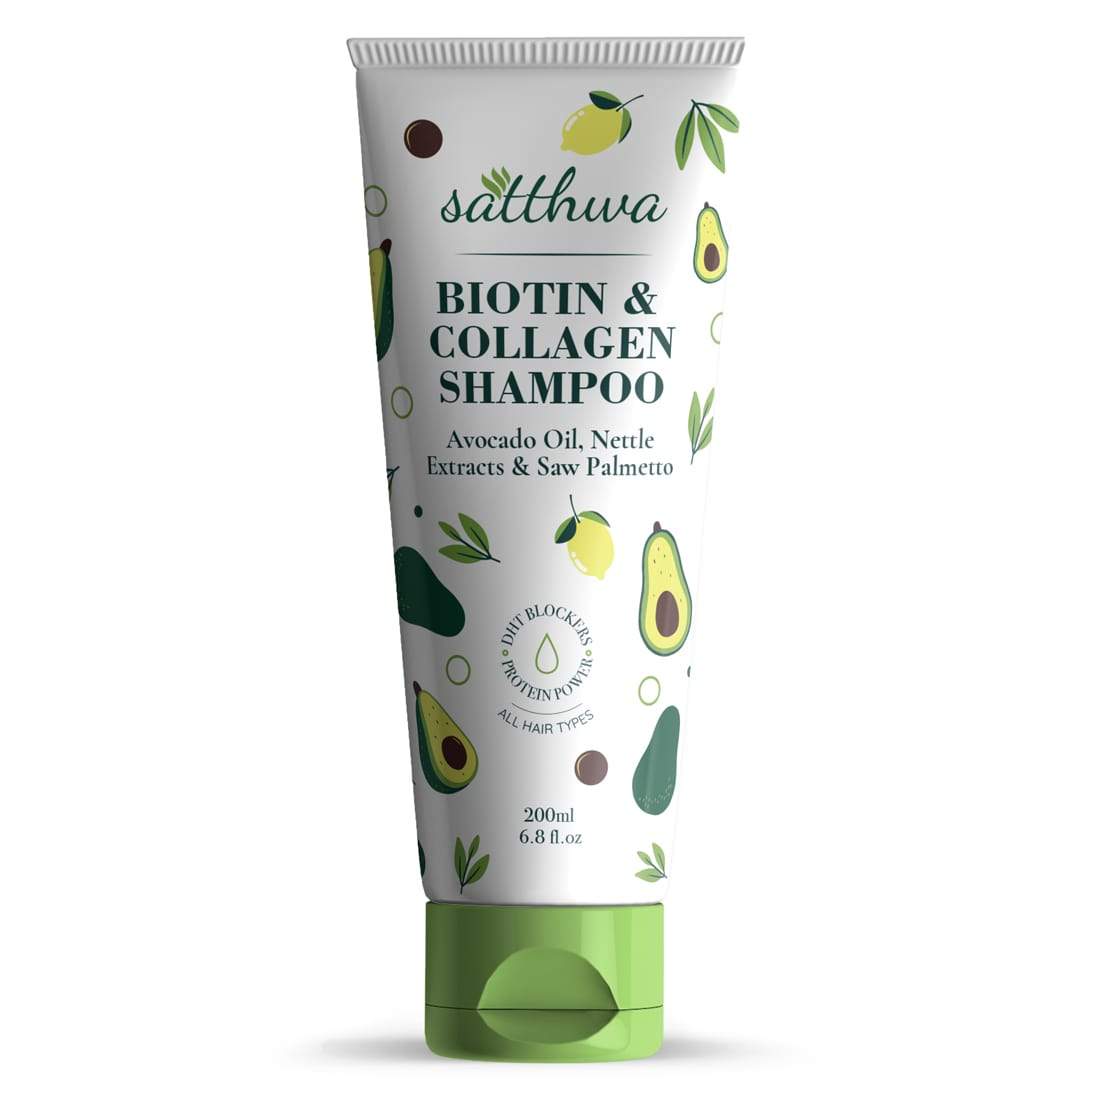 Satthwa Biotin and Collagen Shampoo The Best Biotin Shampoo